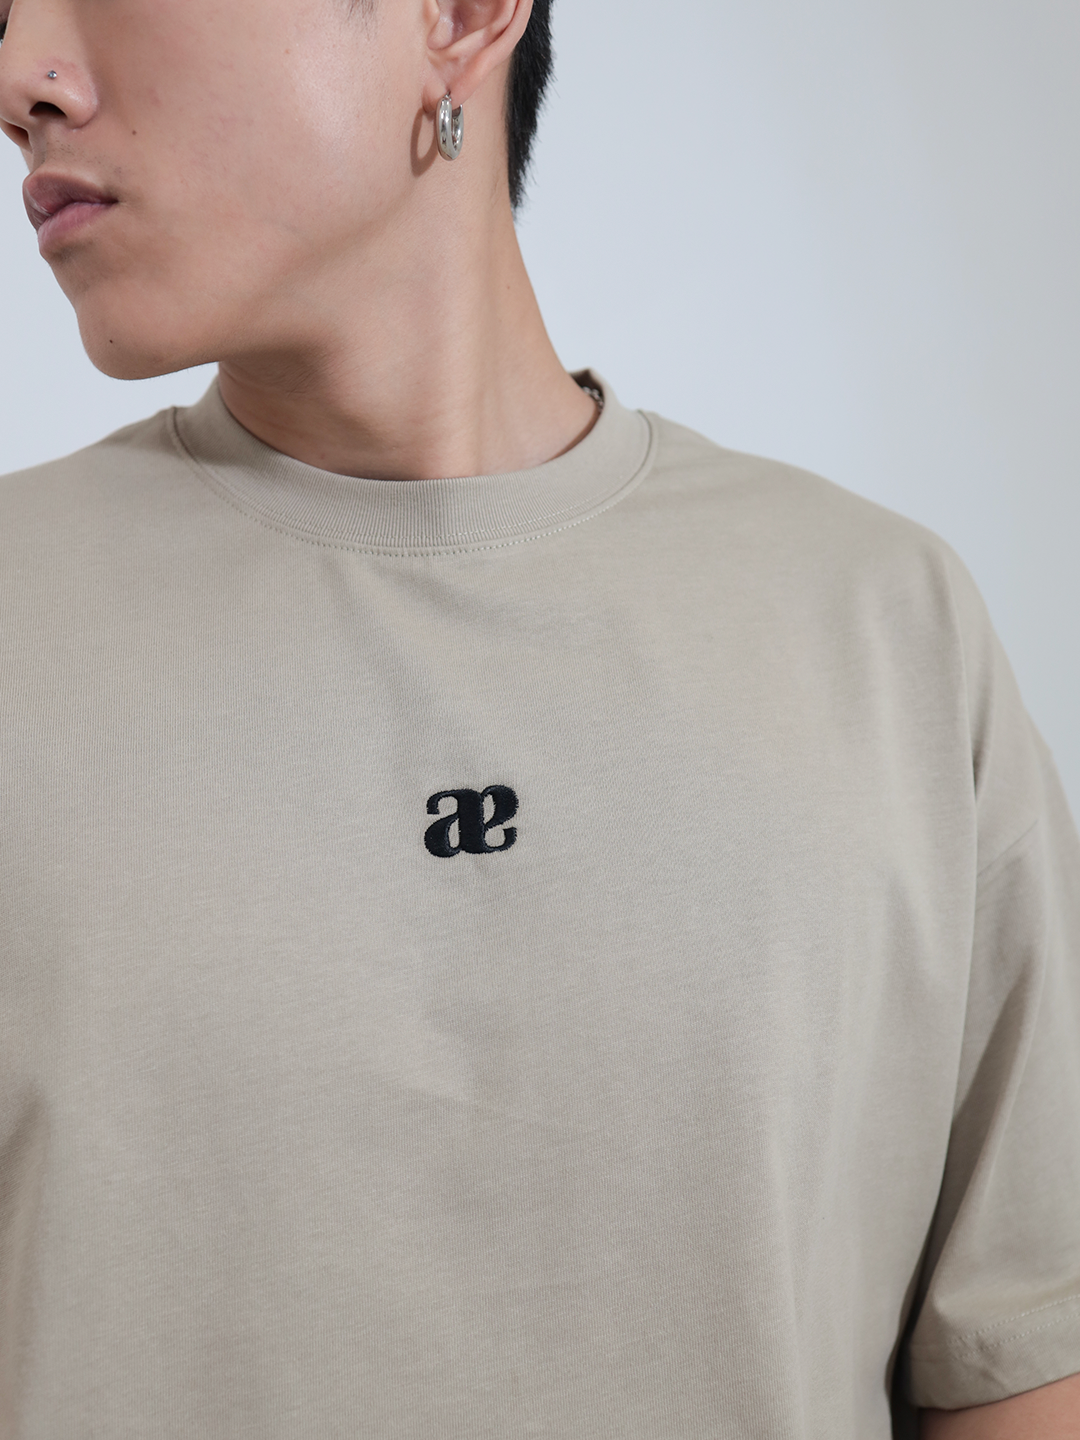 Anagram Embroidered Men’s Cotton T-shirt (Khaki)